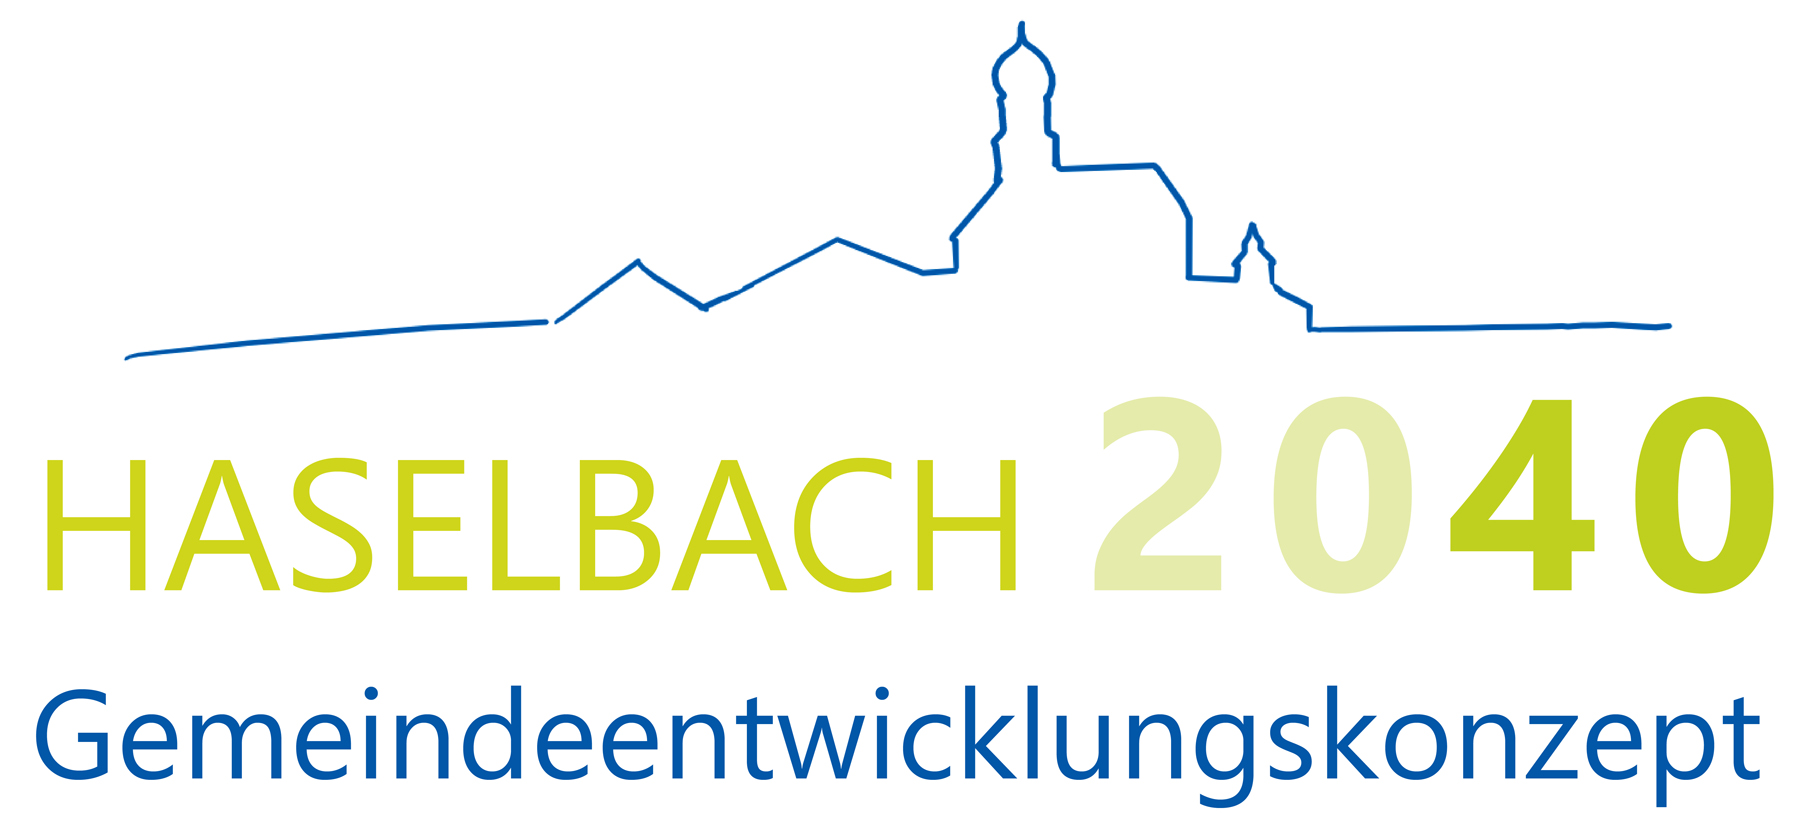 Logo Haselbach2040